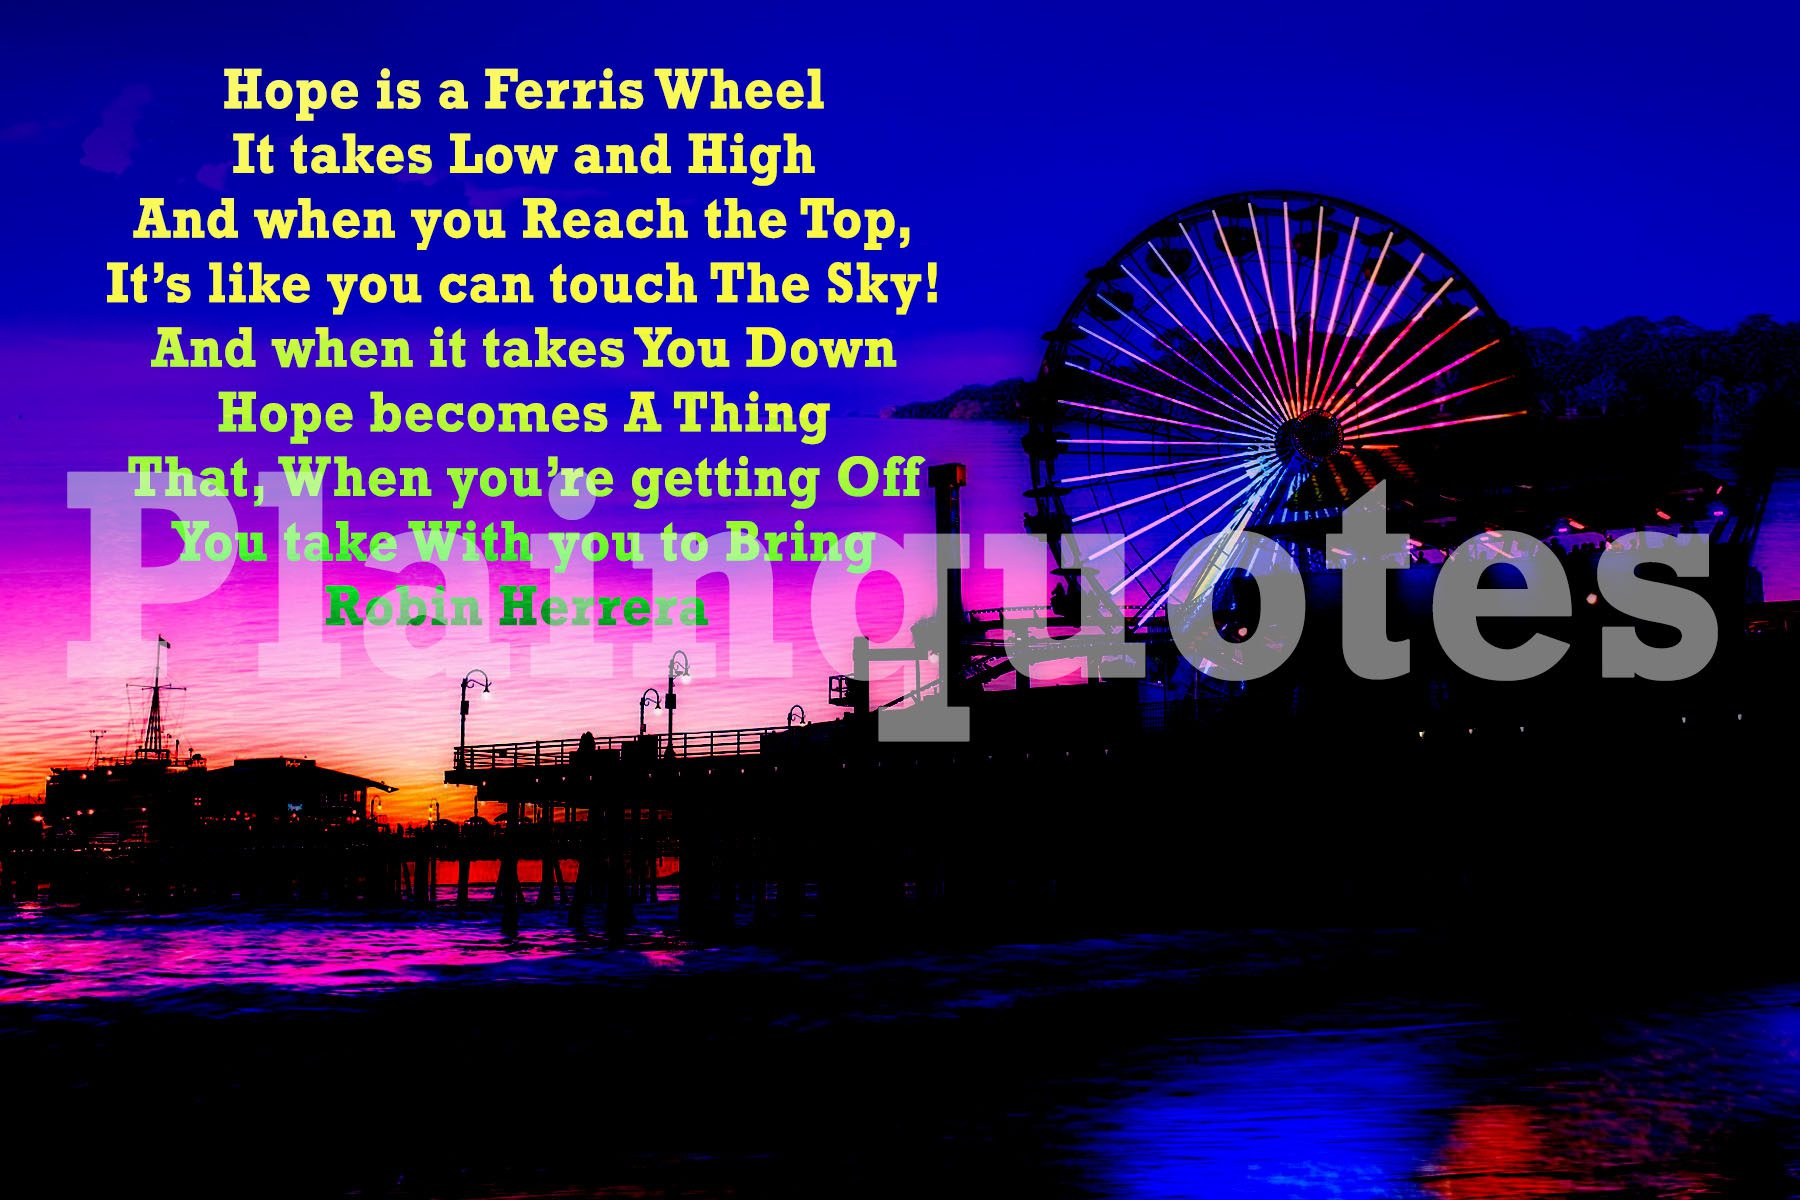 ferris wheel quote image